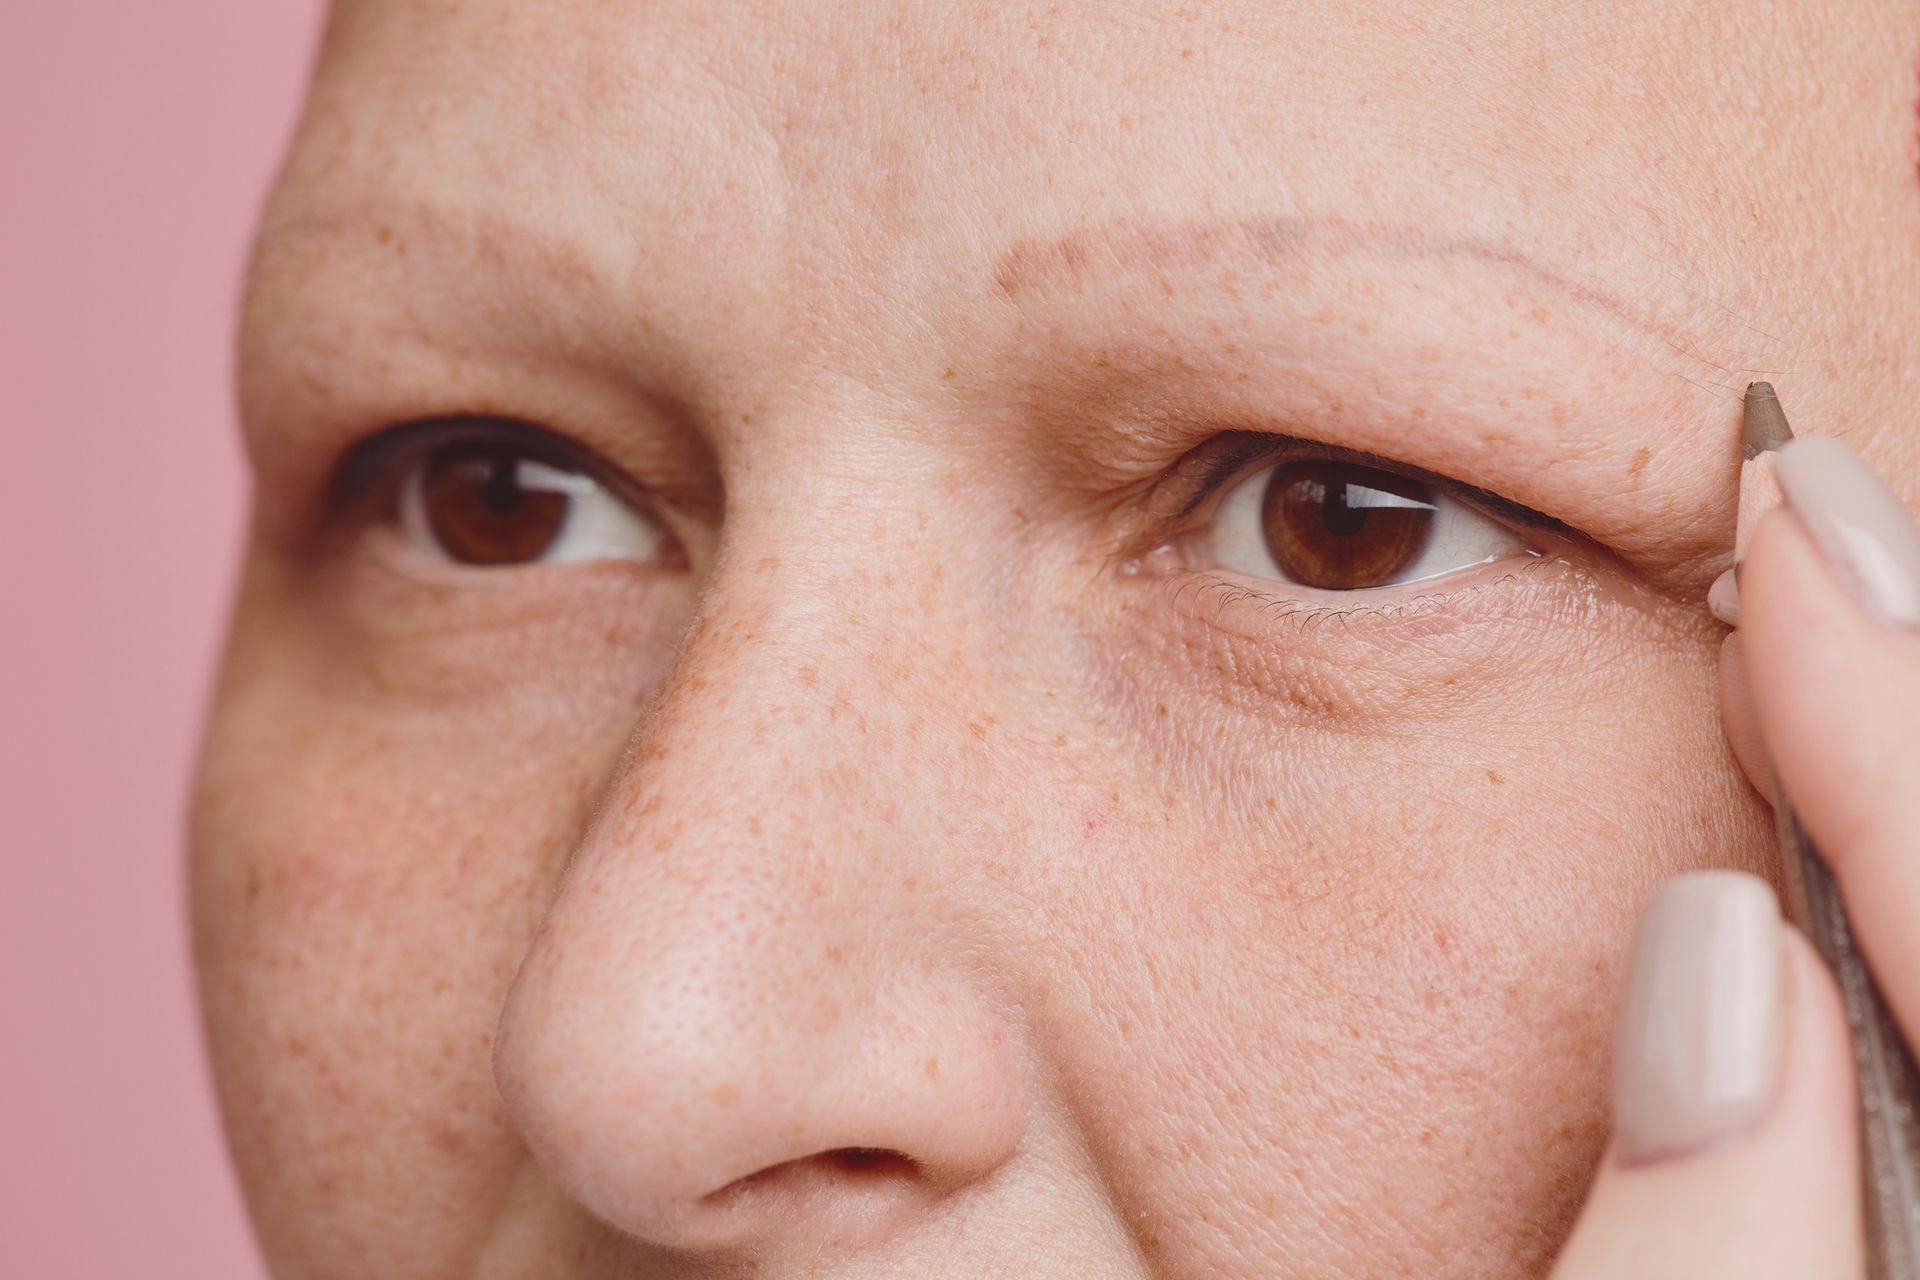 Woman with Alopecia, no eyebrows